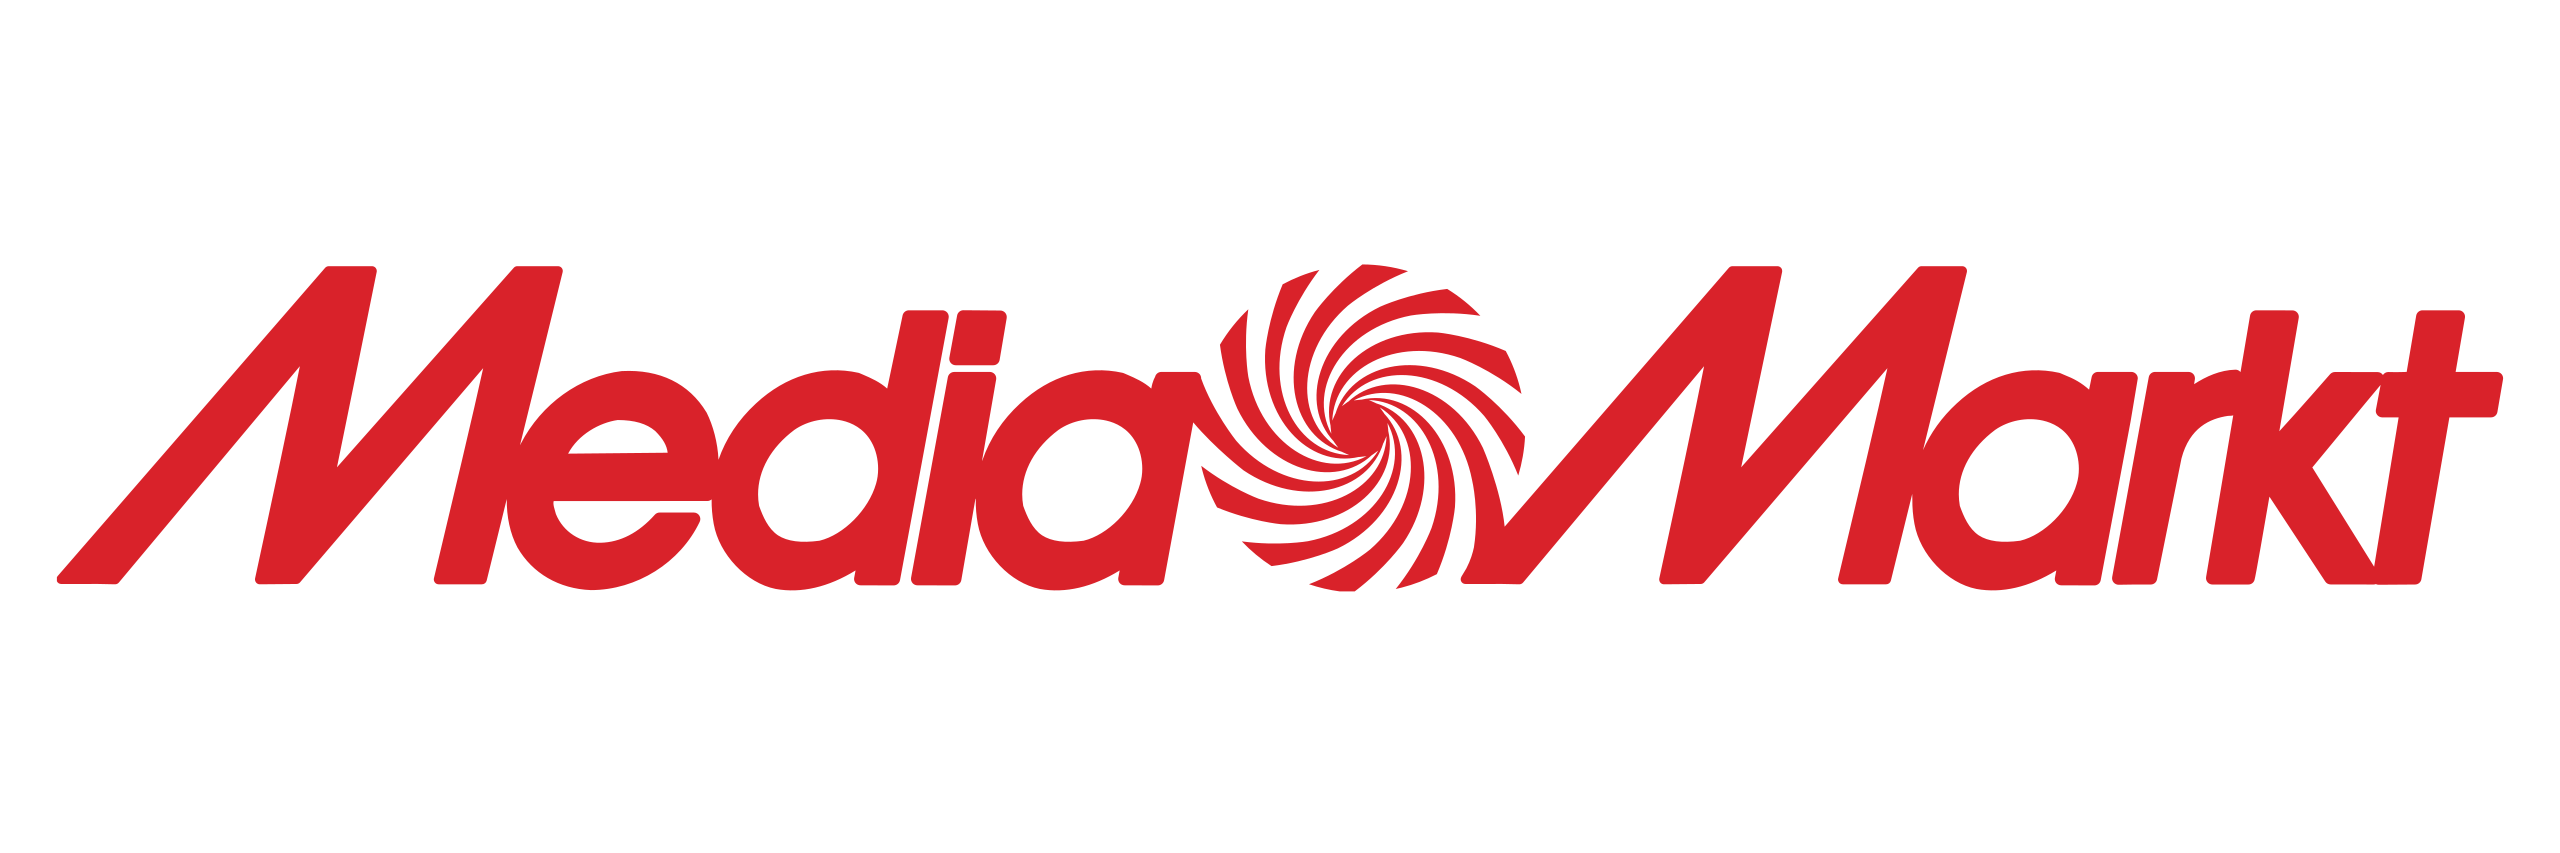 Media Markt logo, client of Renommé Event